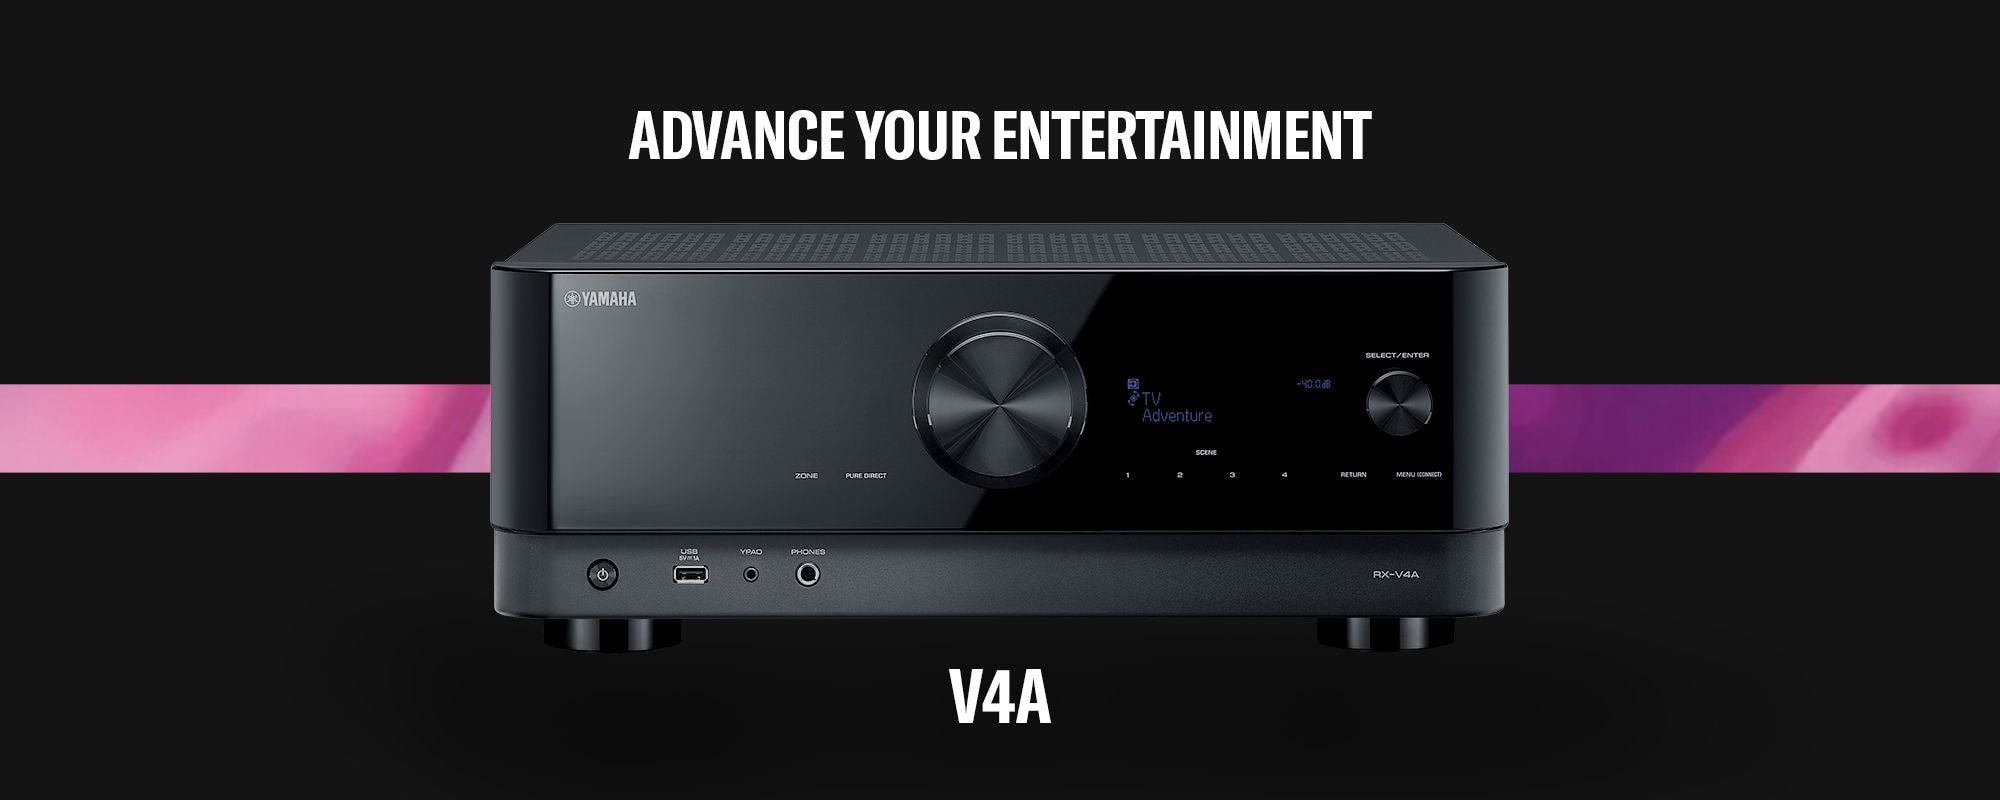 Yamaha RX-V4A V4A Receiver Amp ADVANCE YOUR ENTERTAINMENT